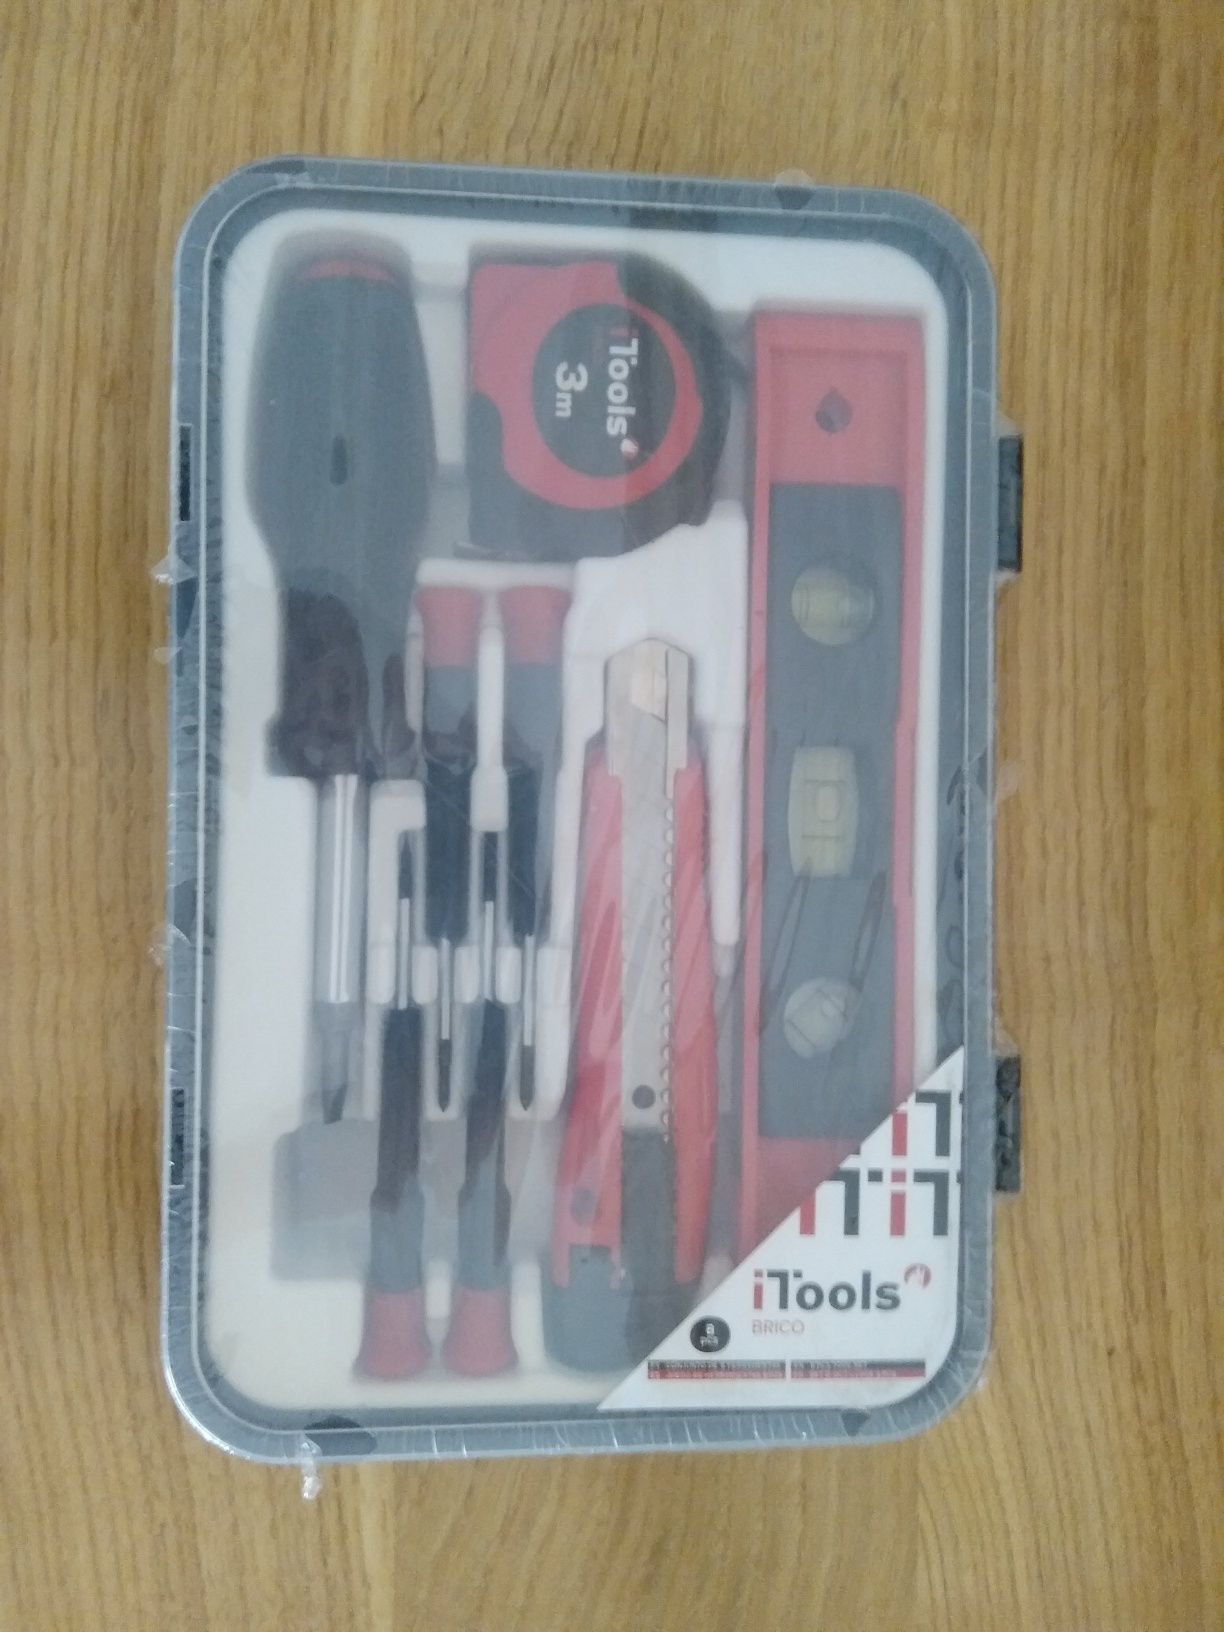 Kit 8 ferramentas iTools com mala